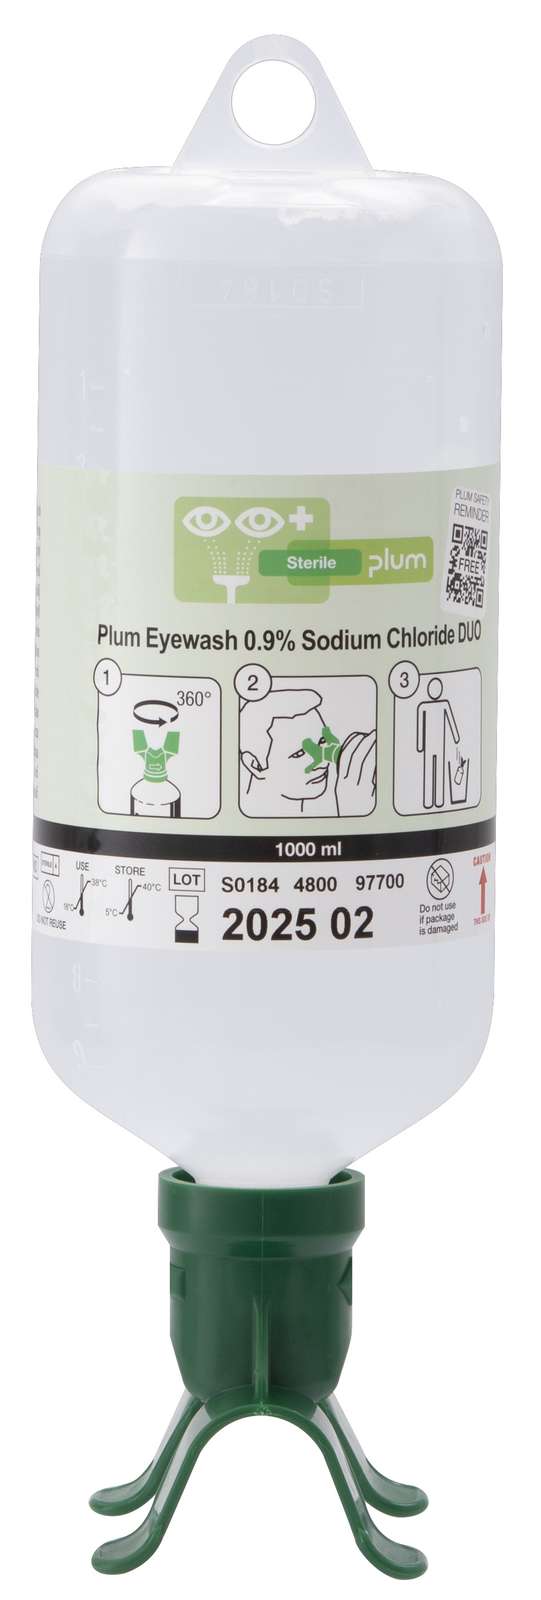 4800 Plum Eyewash Sodium Chloride DUO 1000 ml 20231127